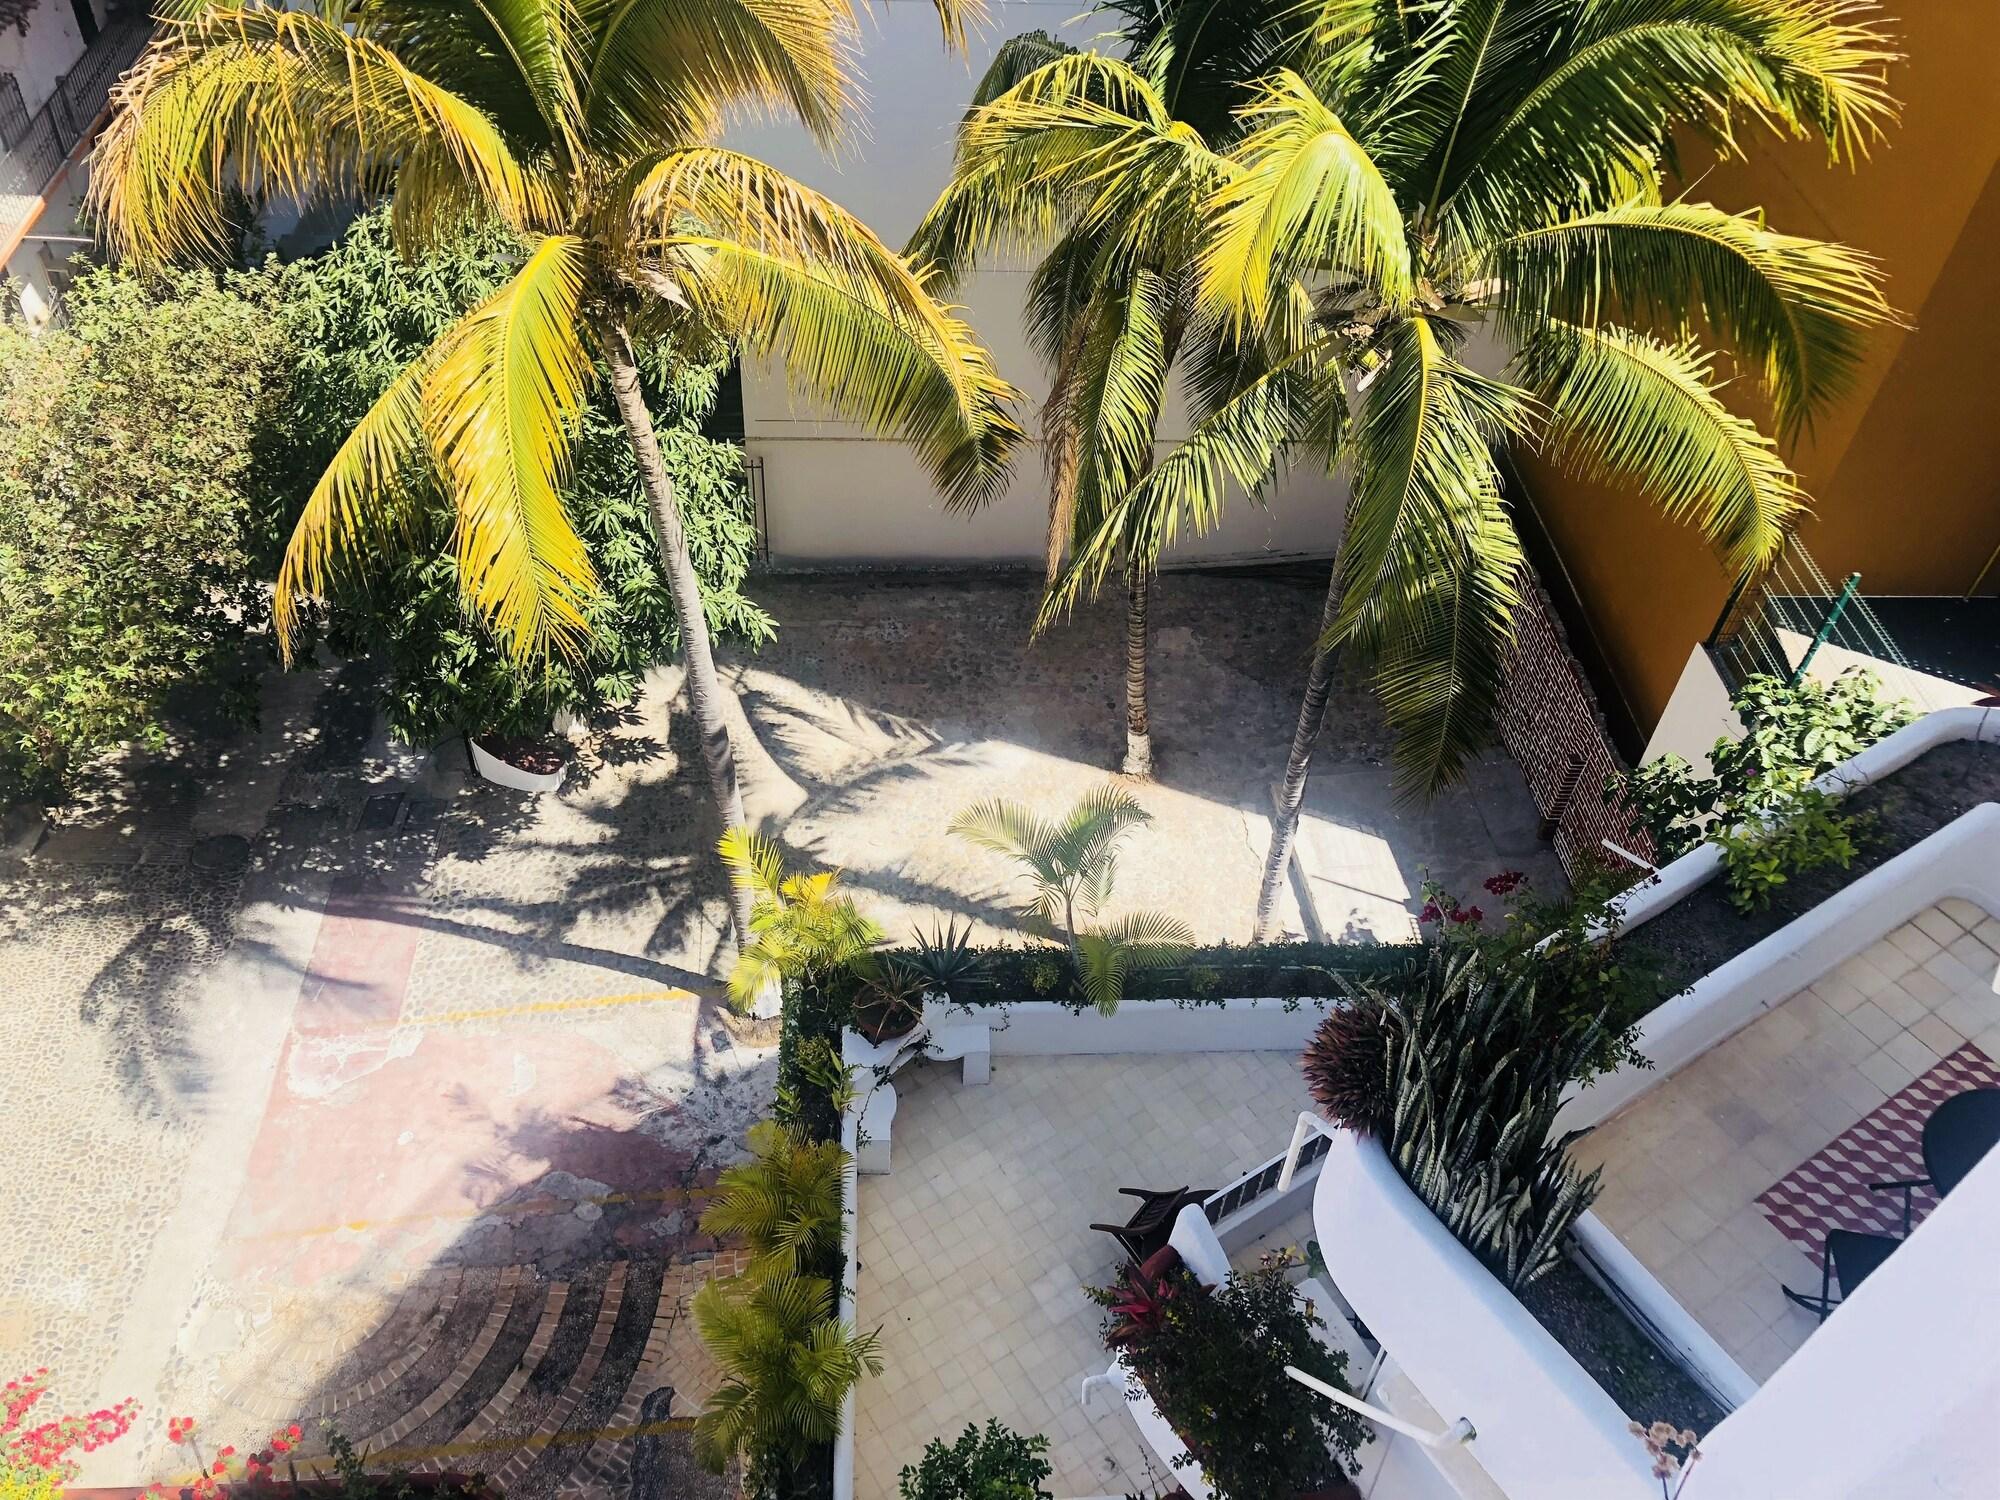 Hotel Amaca Puerto Vallarta - Adults Only Exterior foto